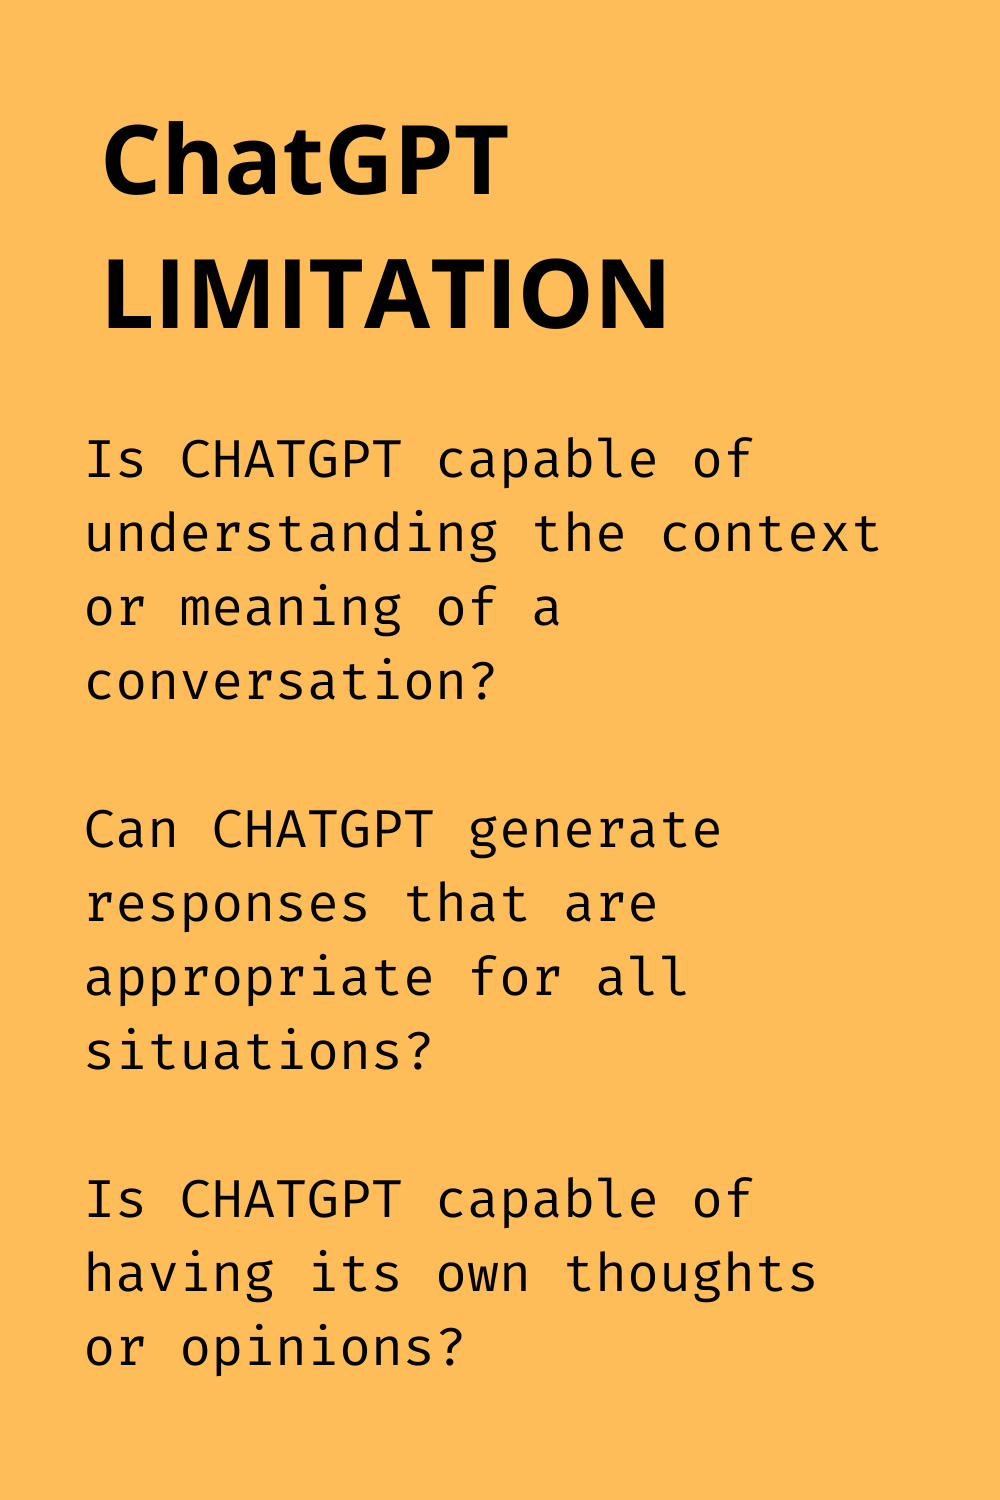 CHATGPT limitations